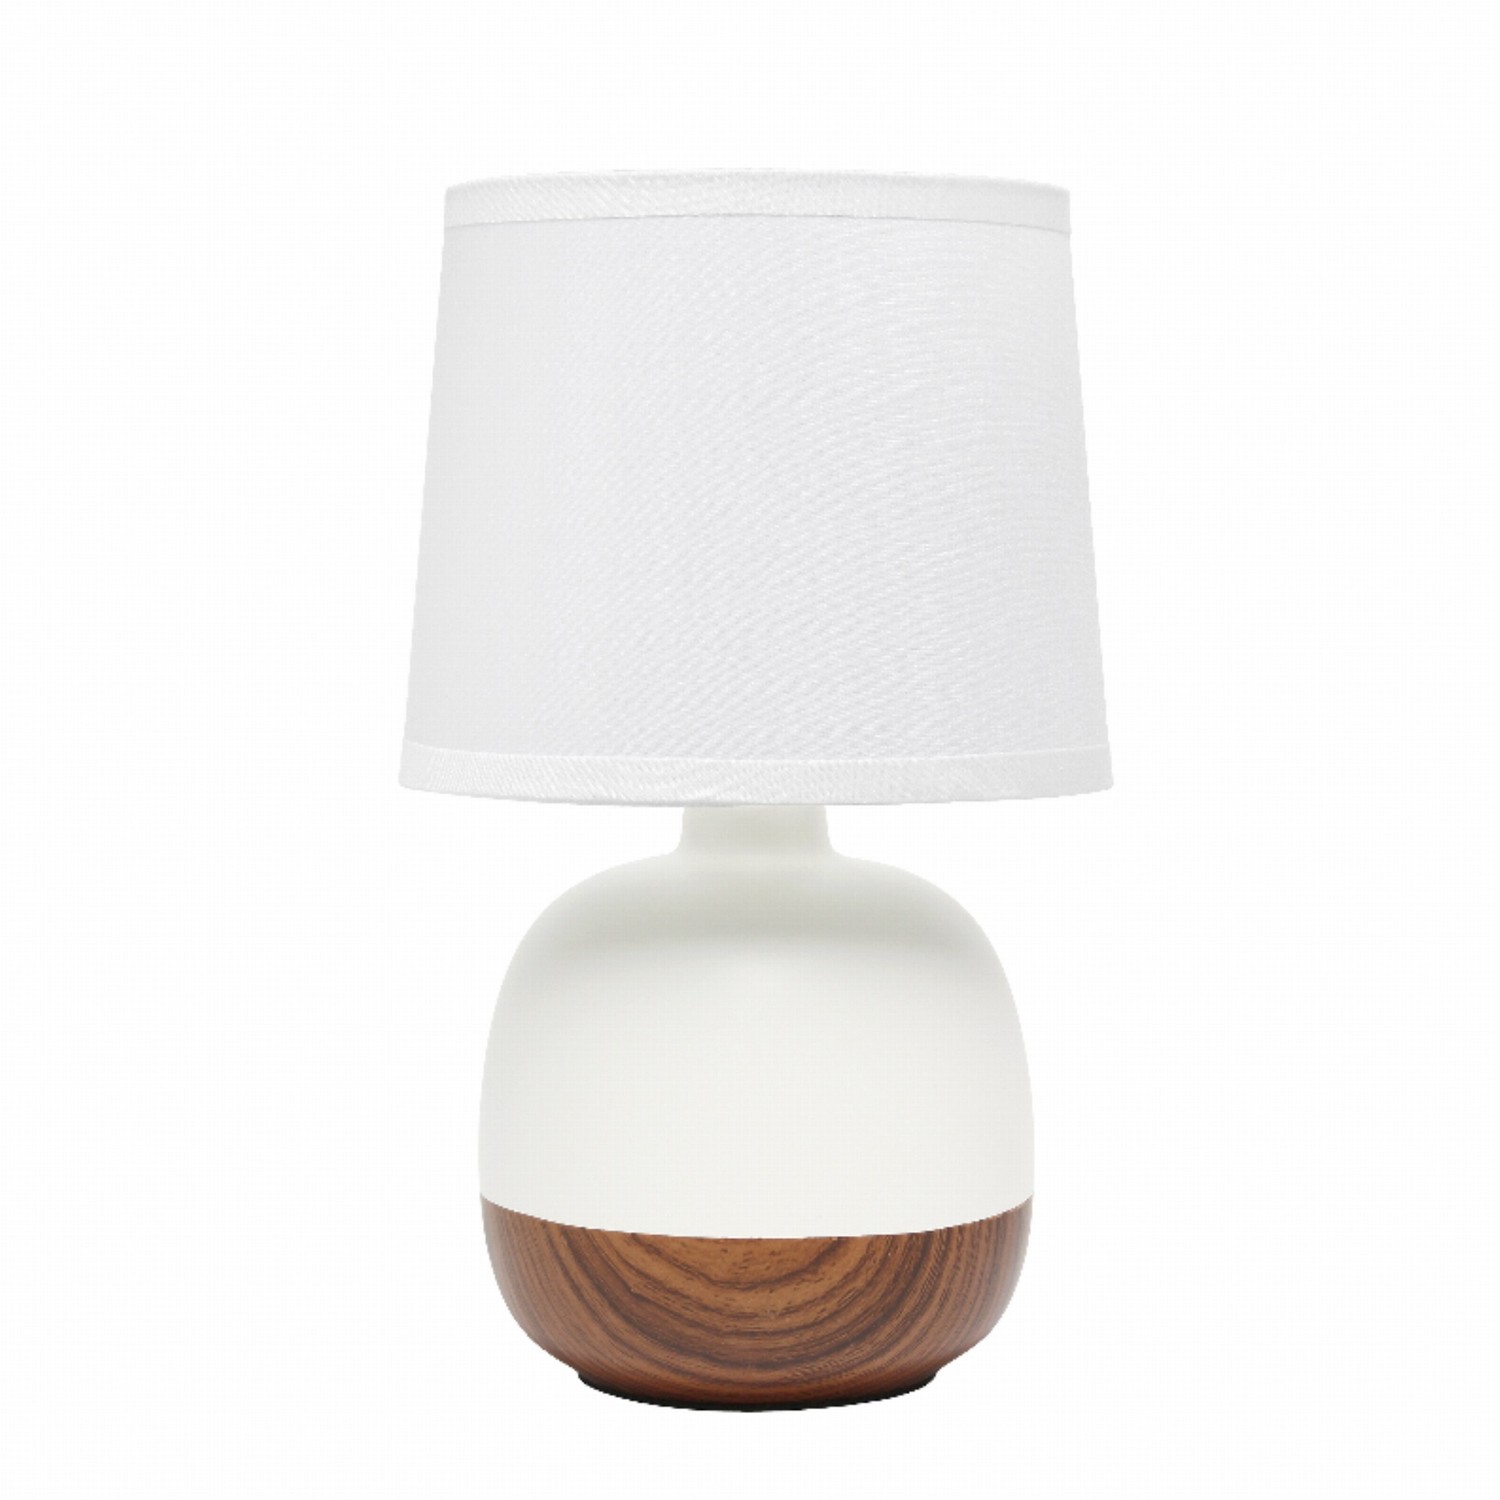 Simple Designs Petite Mid Century Table Lamp, Dark Wood and White